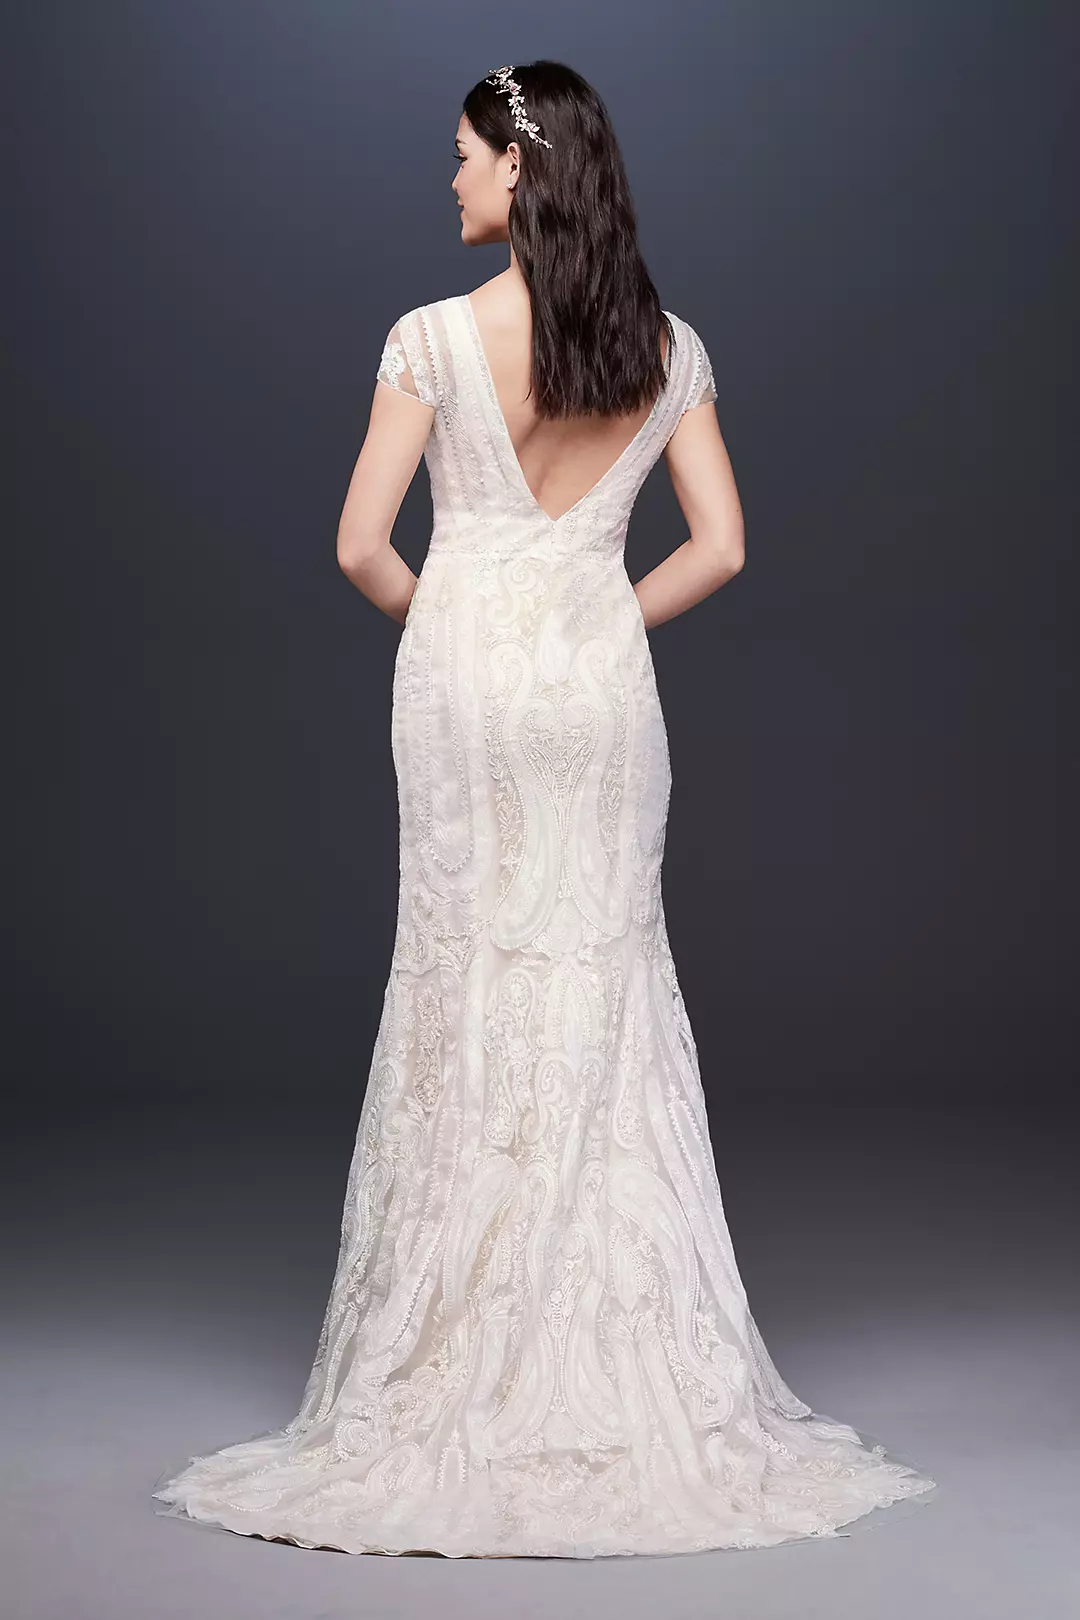 Laser-Cut Lace Illusion Cap Sleeve Wedding Dress Image 2